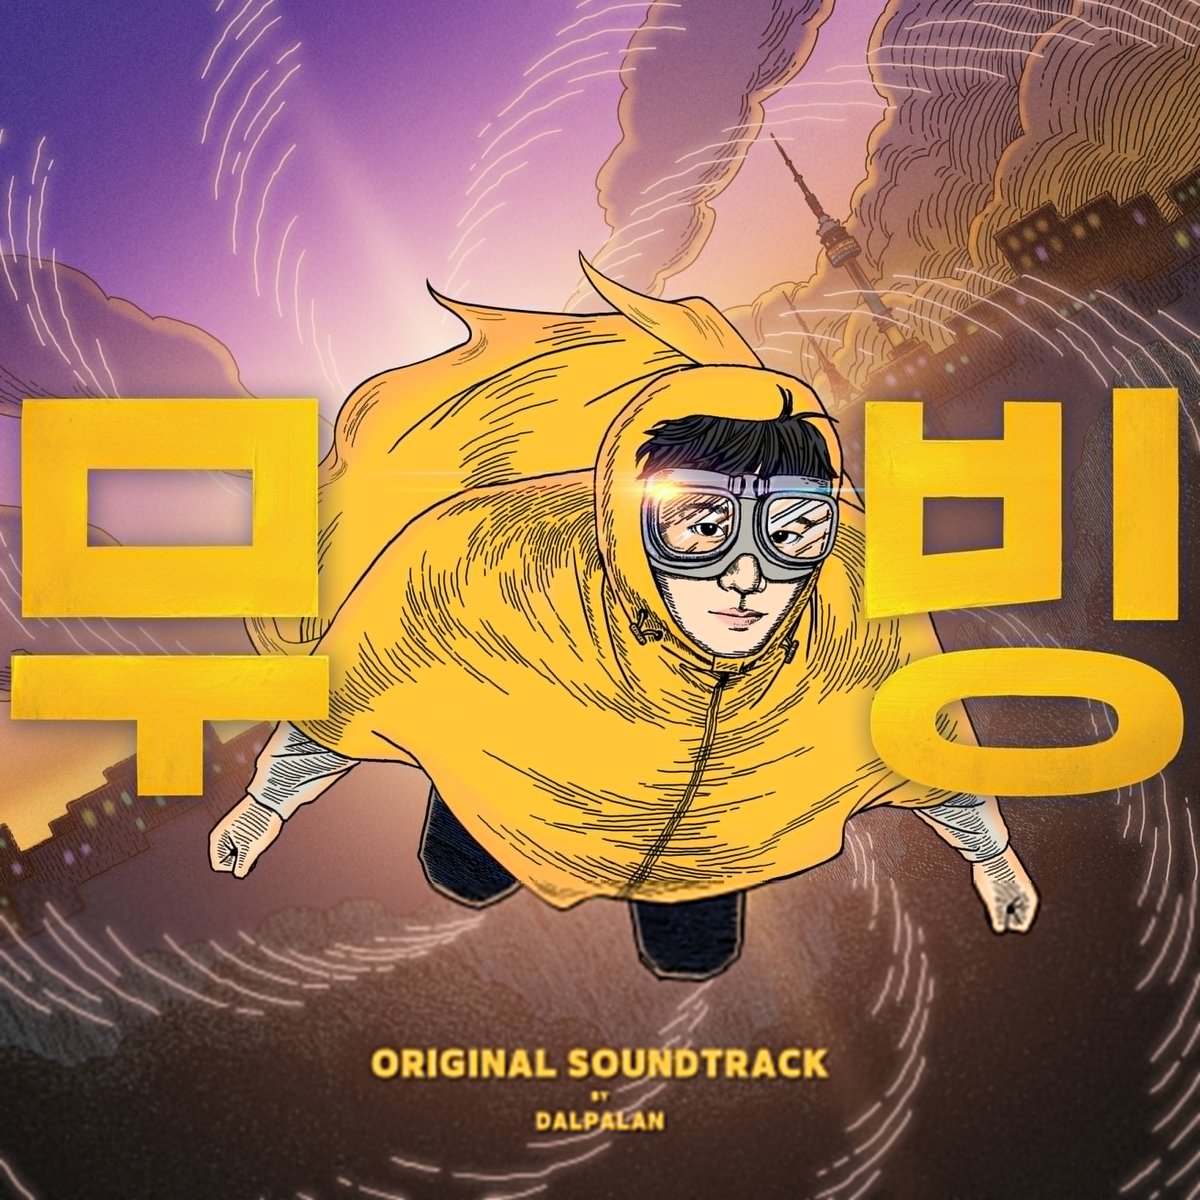 #Moving Disney+ drama OST digital album released! 🎶

#RyuSeungRyong #HanHyoJoo #JoInSung #ChaTaeHyun #RyuSeungBeom #KimSungGyun #KimHeeWon #MoonSeongGeun #LeeJungHa #GoYoonJung #KimDoHoon